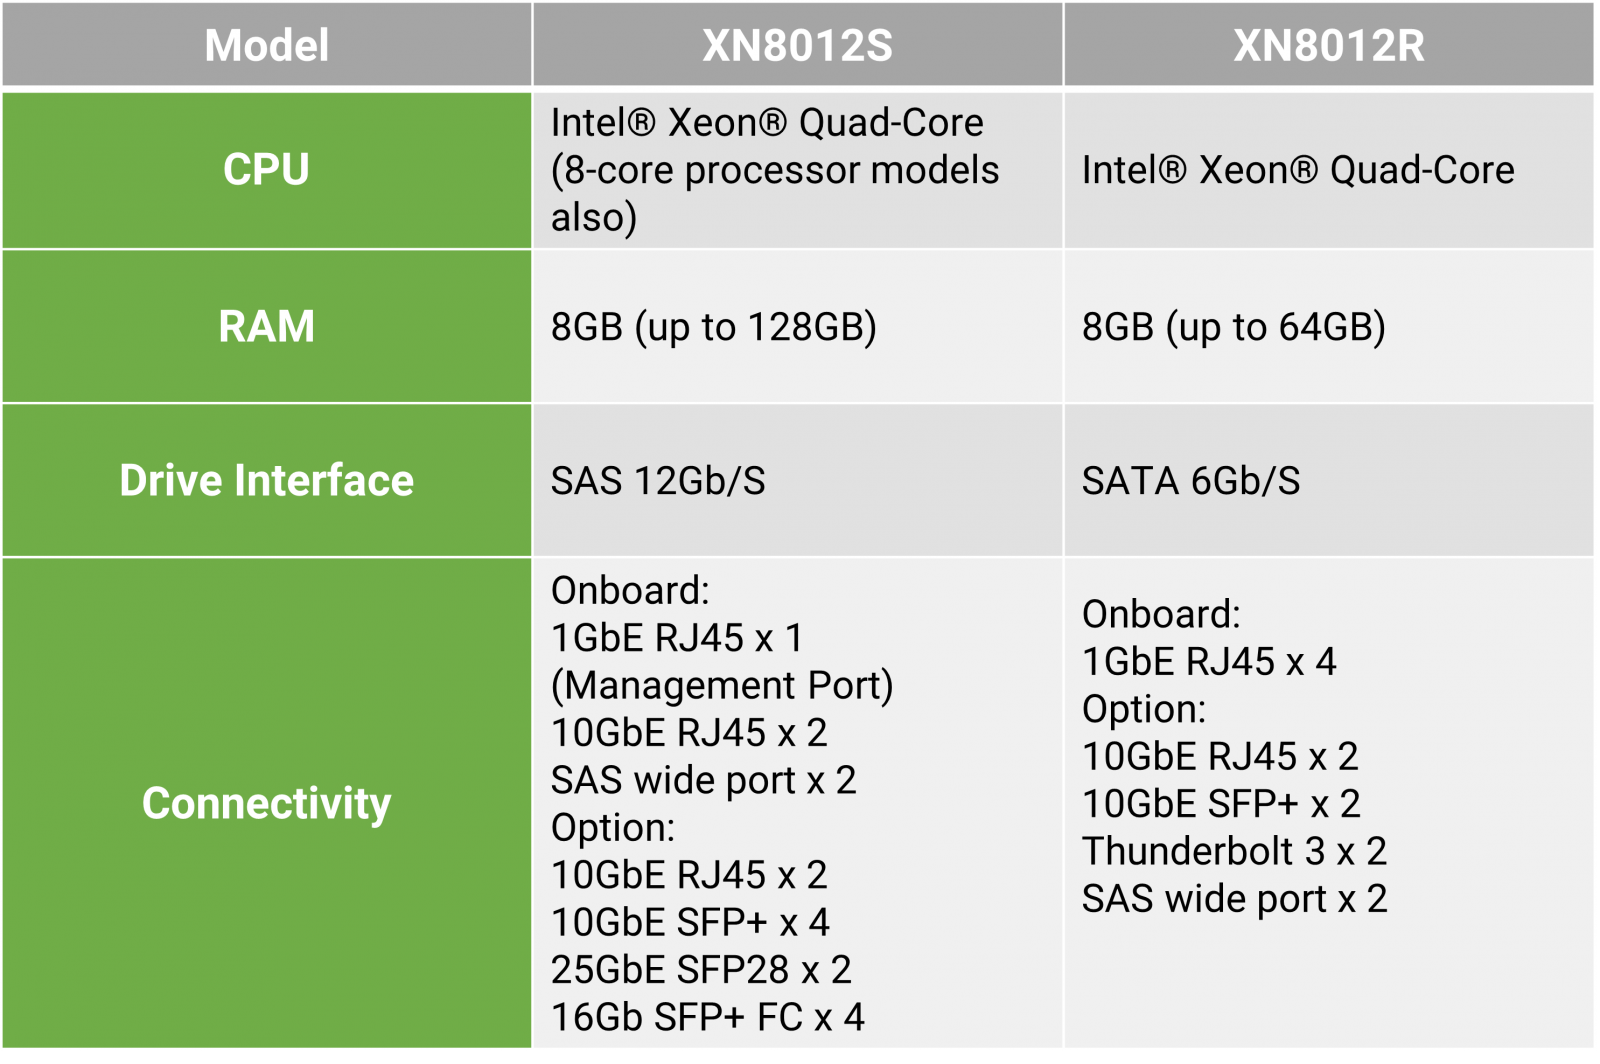 Comparison with XN8012R